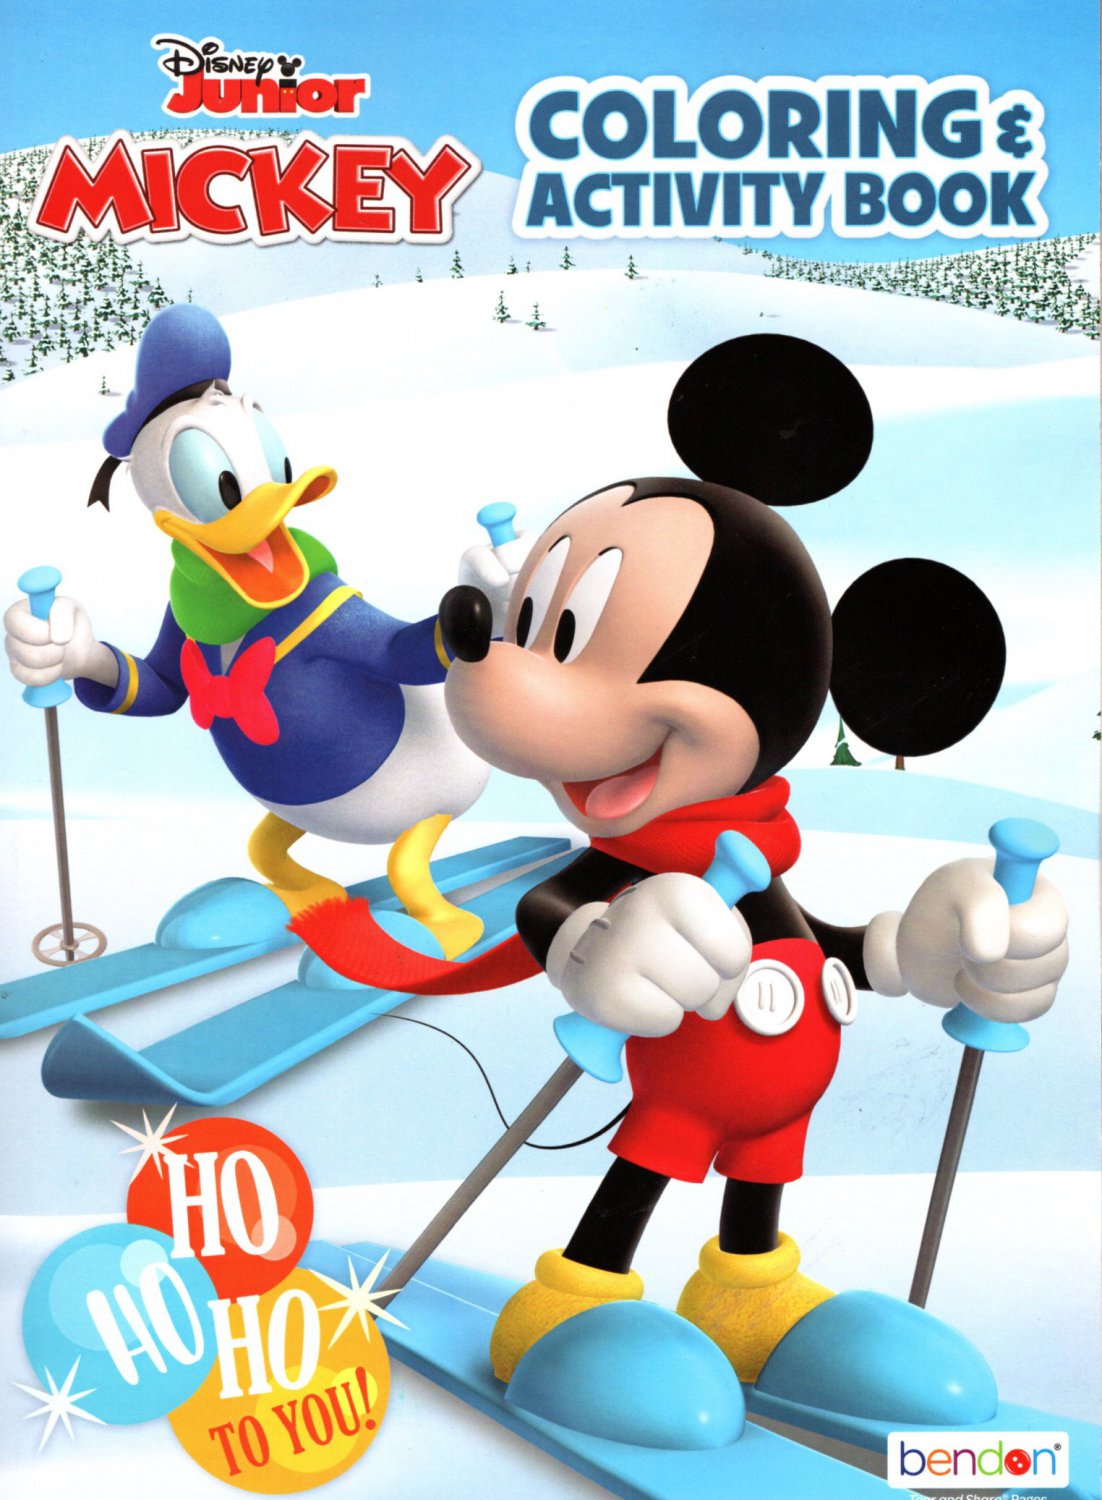 Disney Junior Mickey - Christmas Edition Holiday - Coloring & Activity Book - Ho Ho Ho to You!